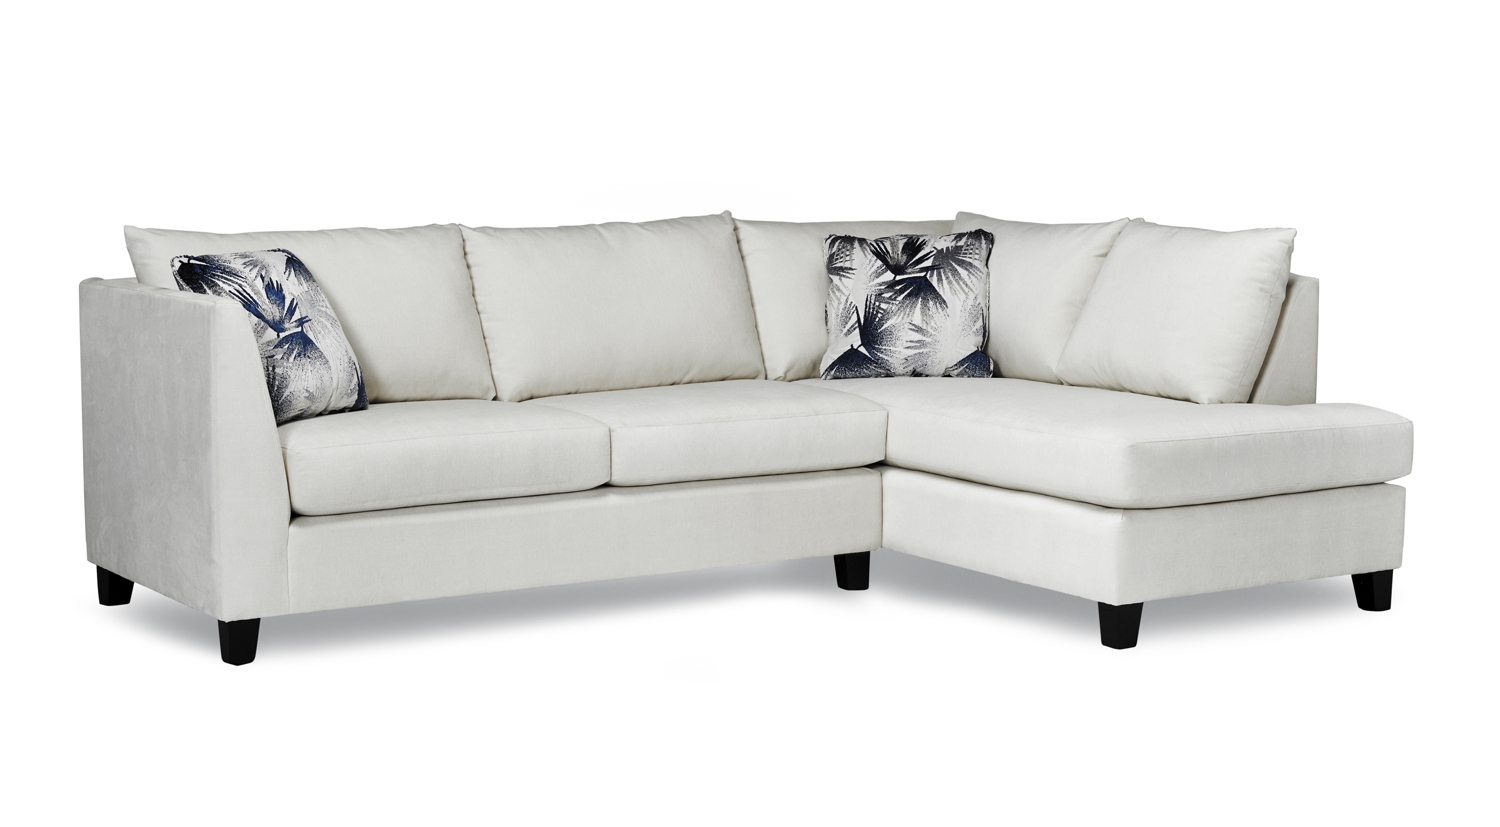 Tofino Stylish Sofa made in BC